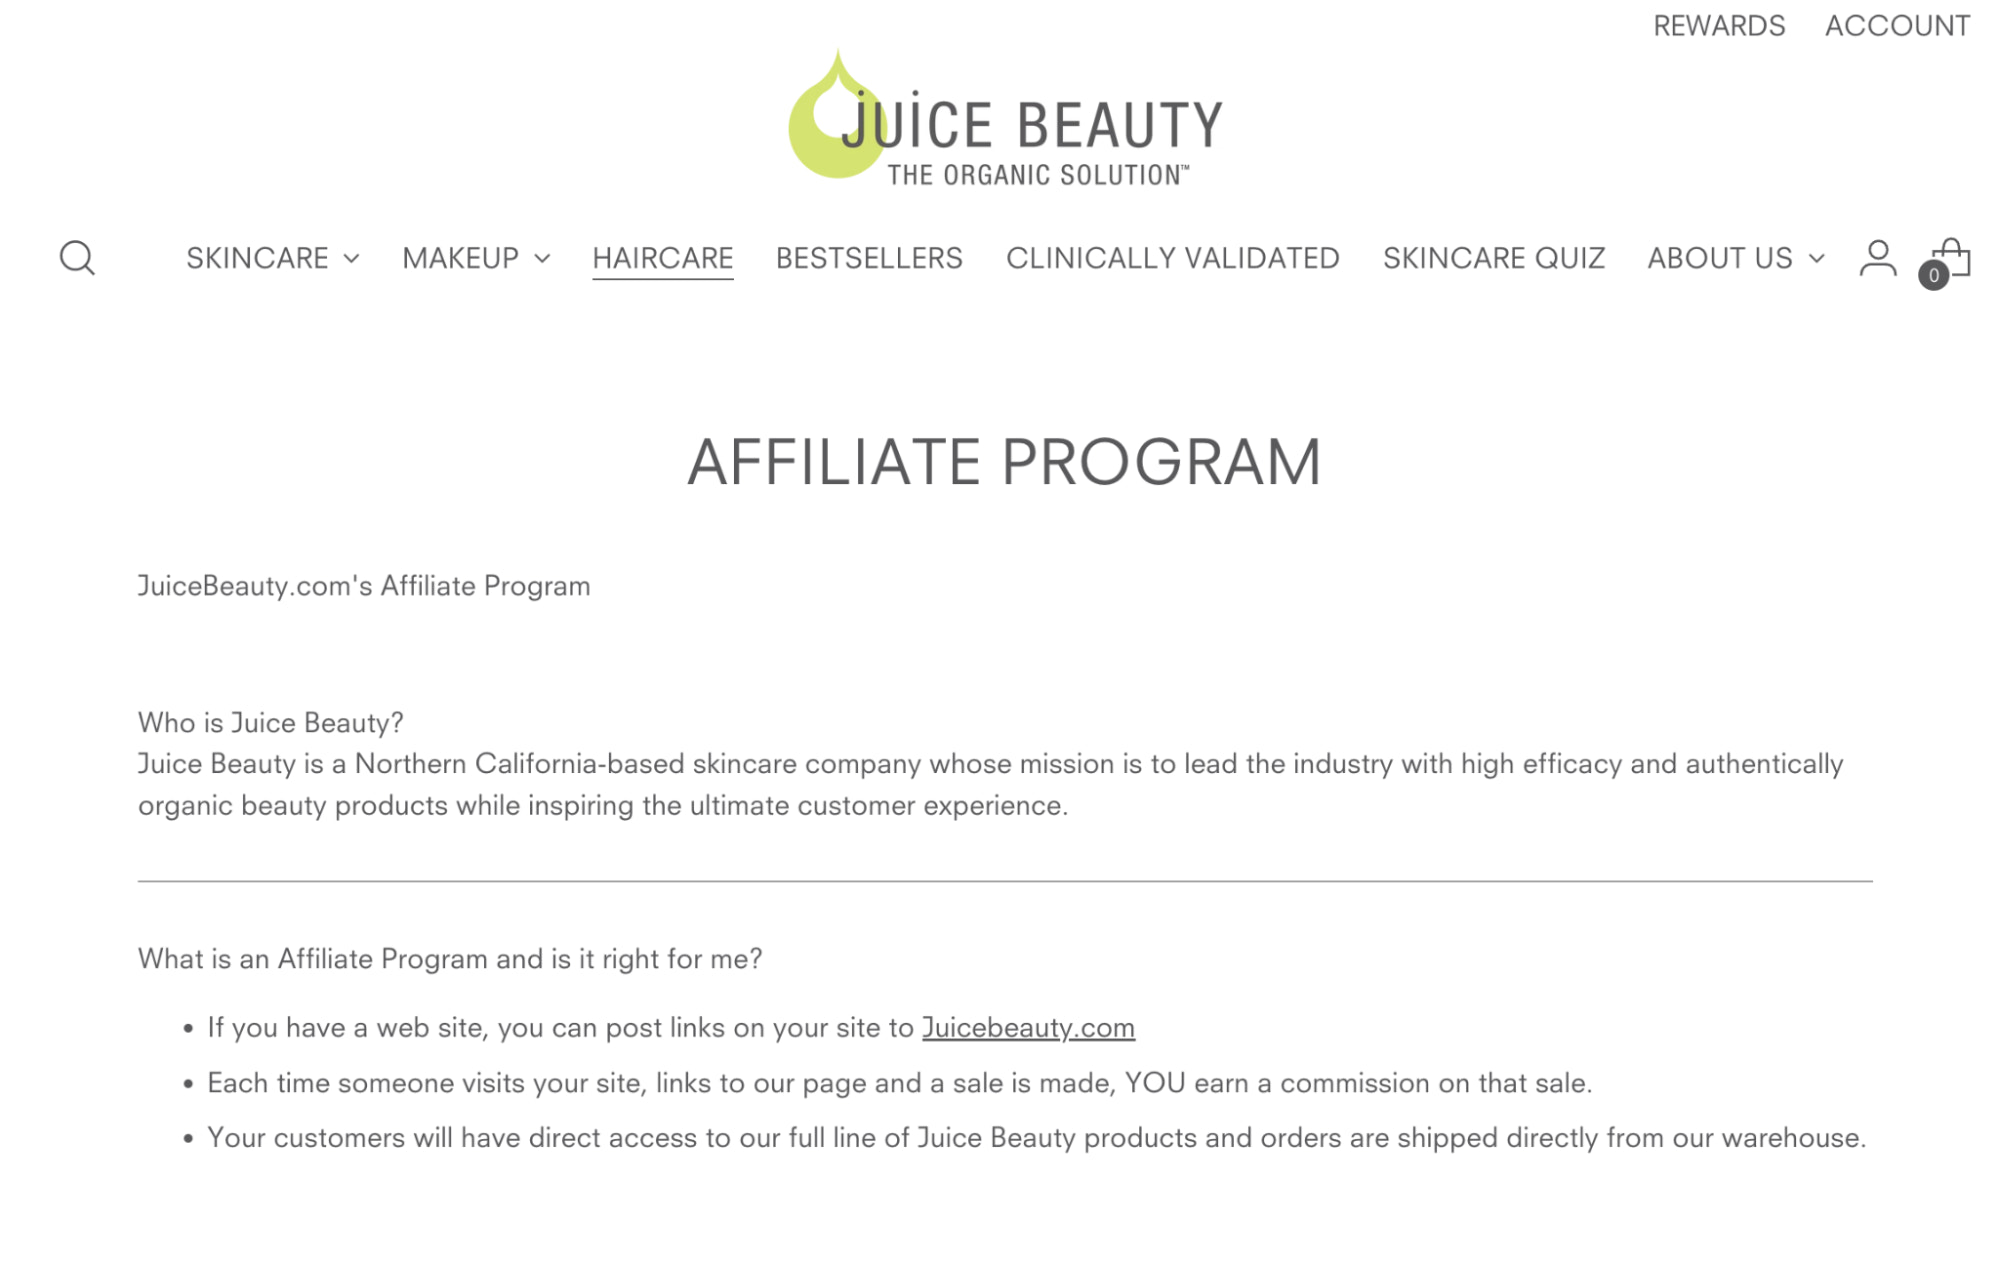 A screenshot of the Juice Beauty "Affiliate Program" page